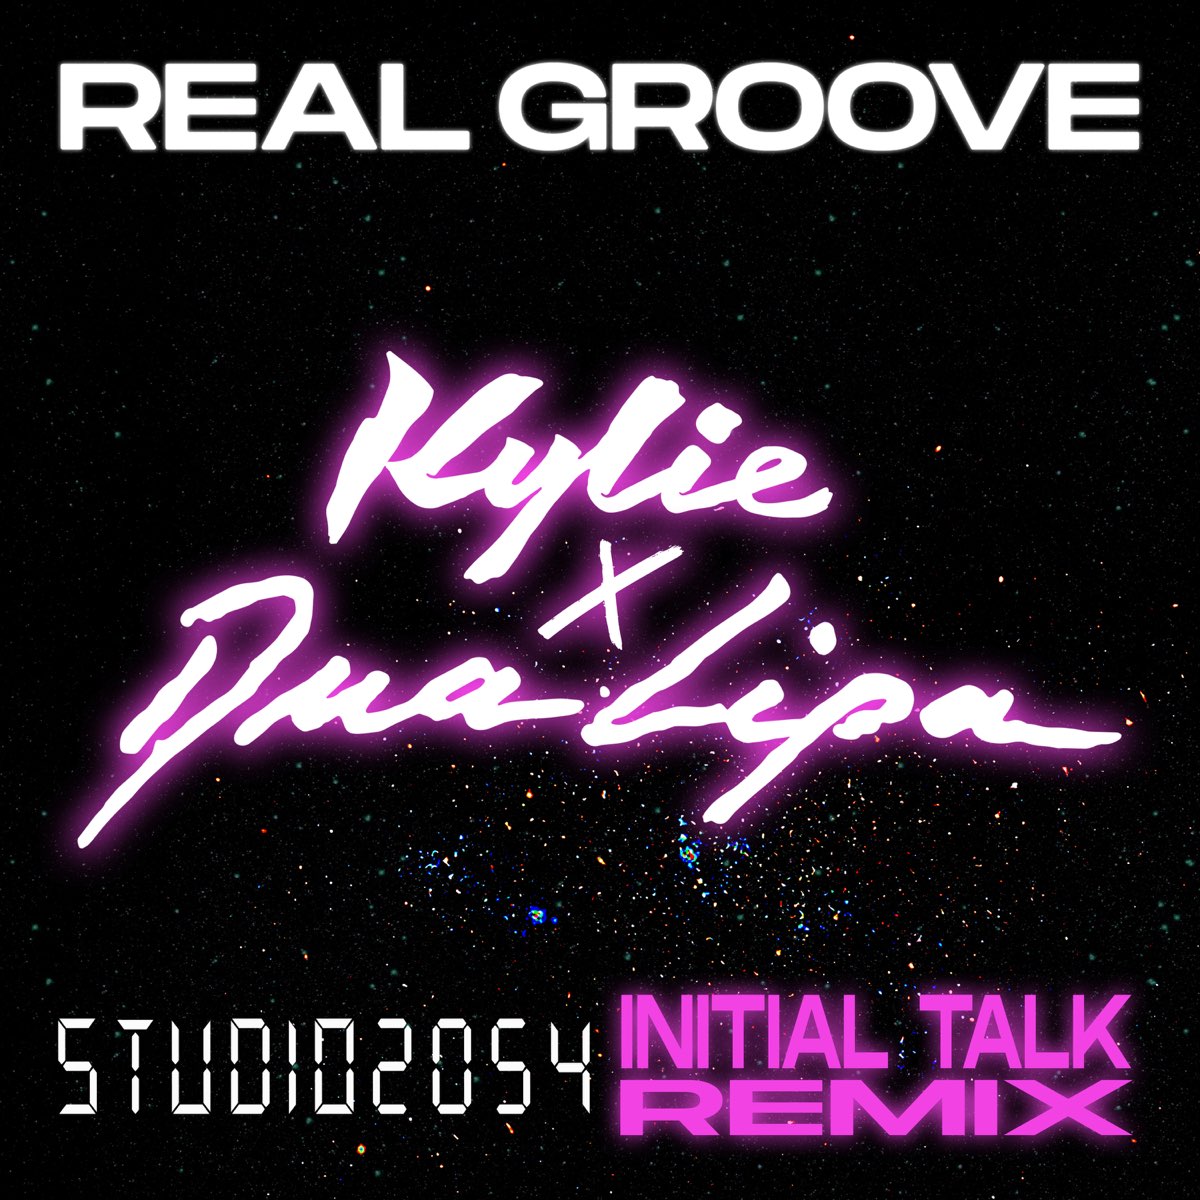 Kylie Minogue ft. featuring Dua Lipa Real Groove (Studio 2054 Initial Talk Remix) cover artwork